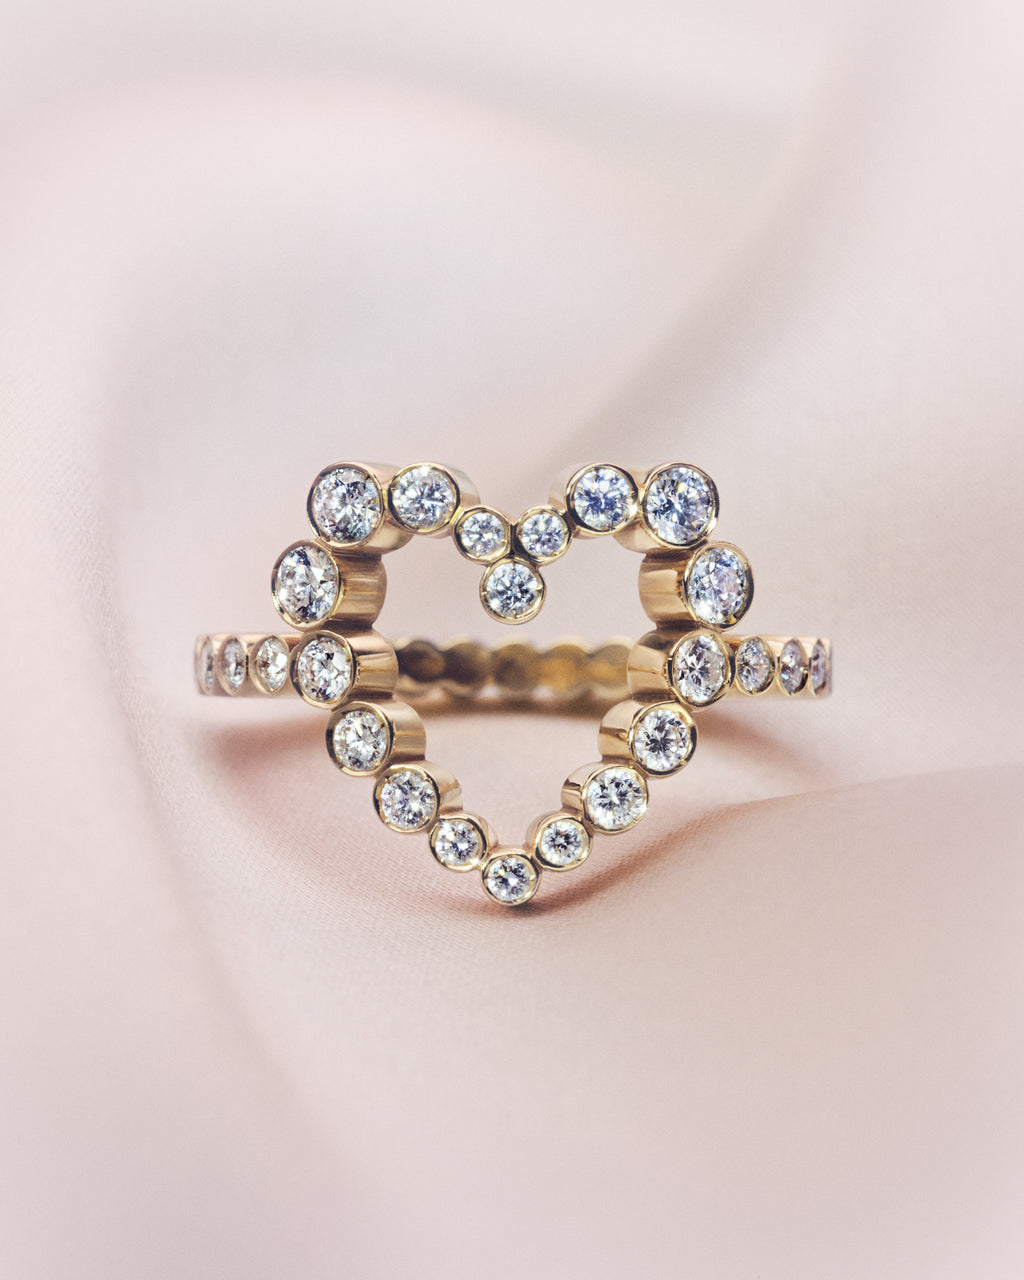 18K yellow gold heart shaped diamond ring. 